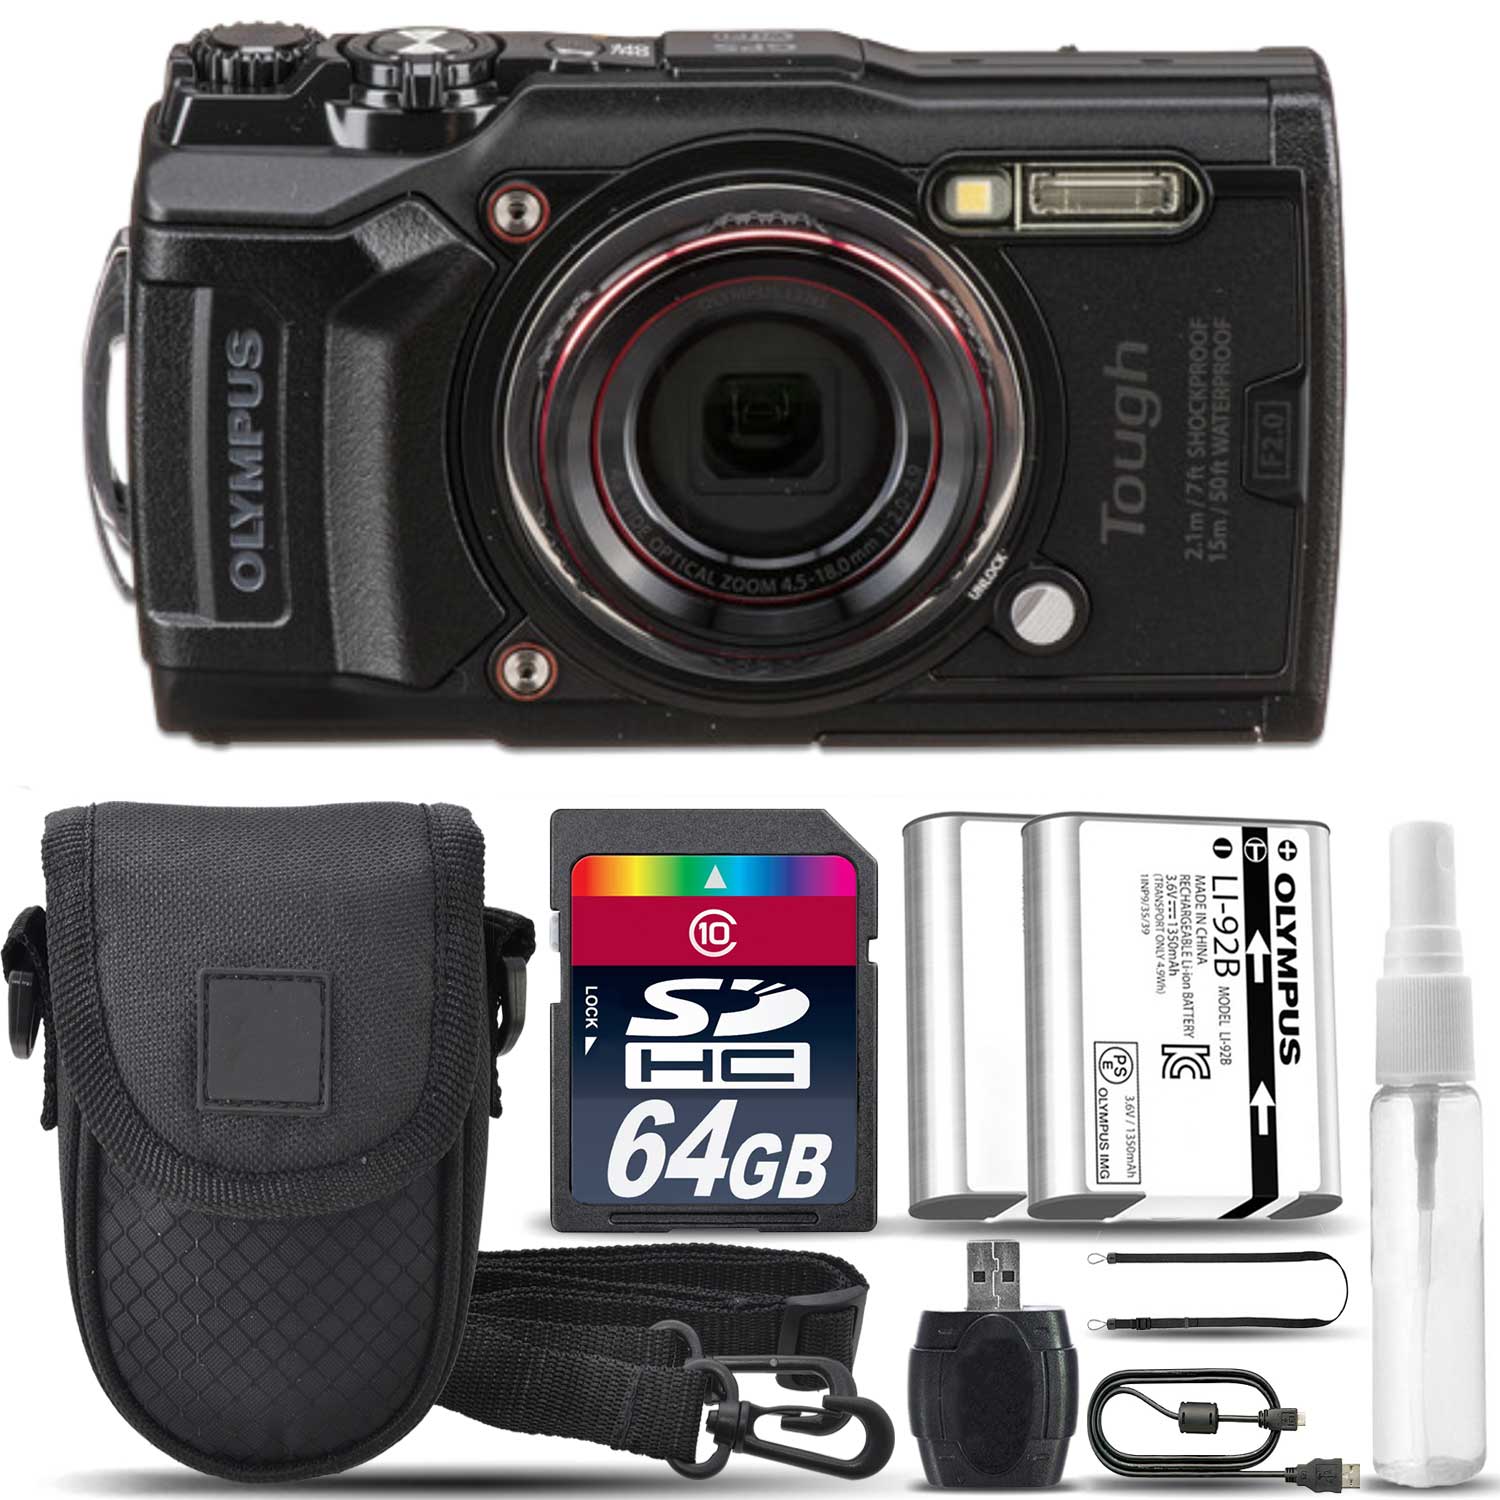 Stylus TOUGH TG-6 Digital Waterproof Camera Black + Case +EXT BATT + 64GB *FREE SHIPPING*